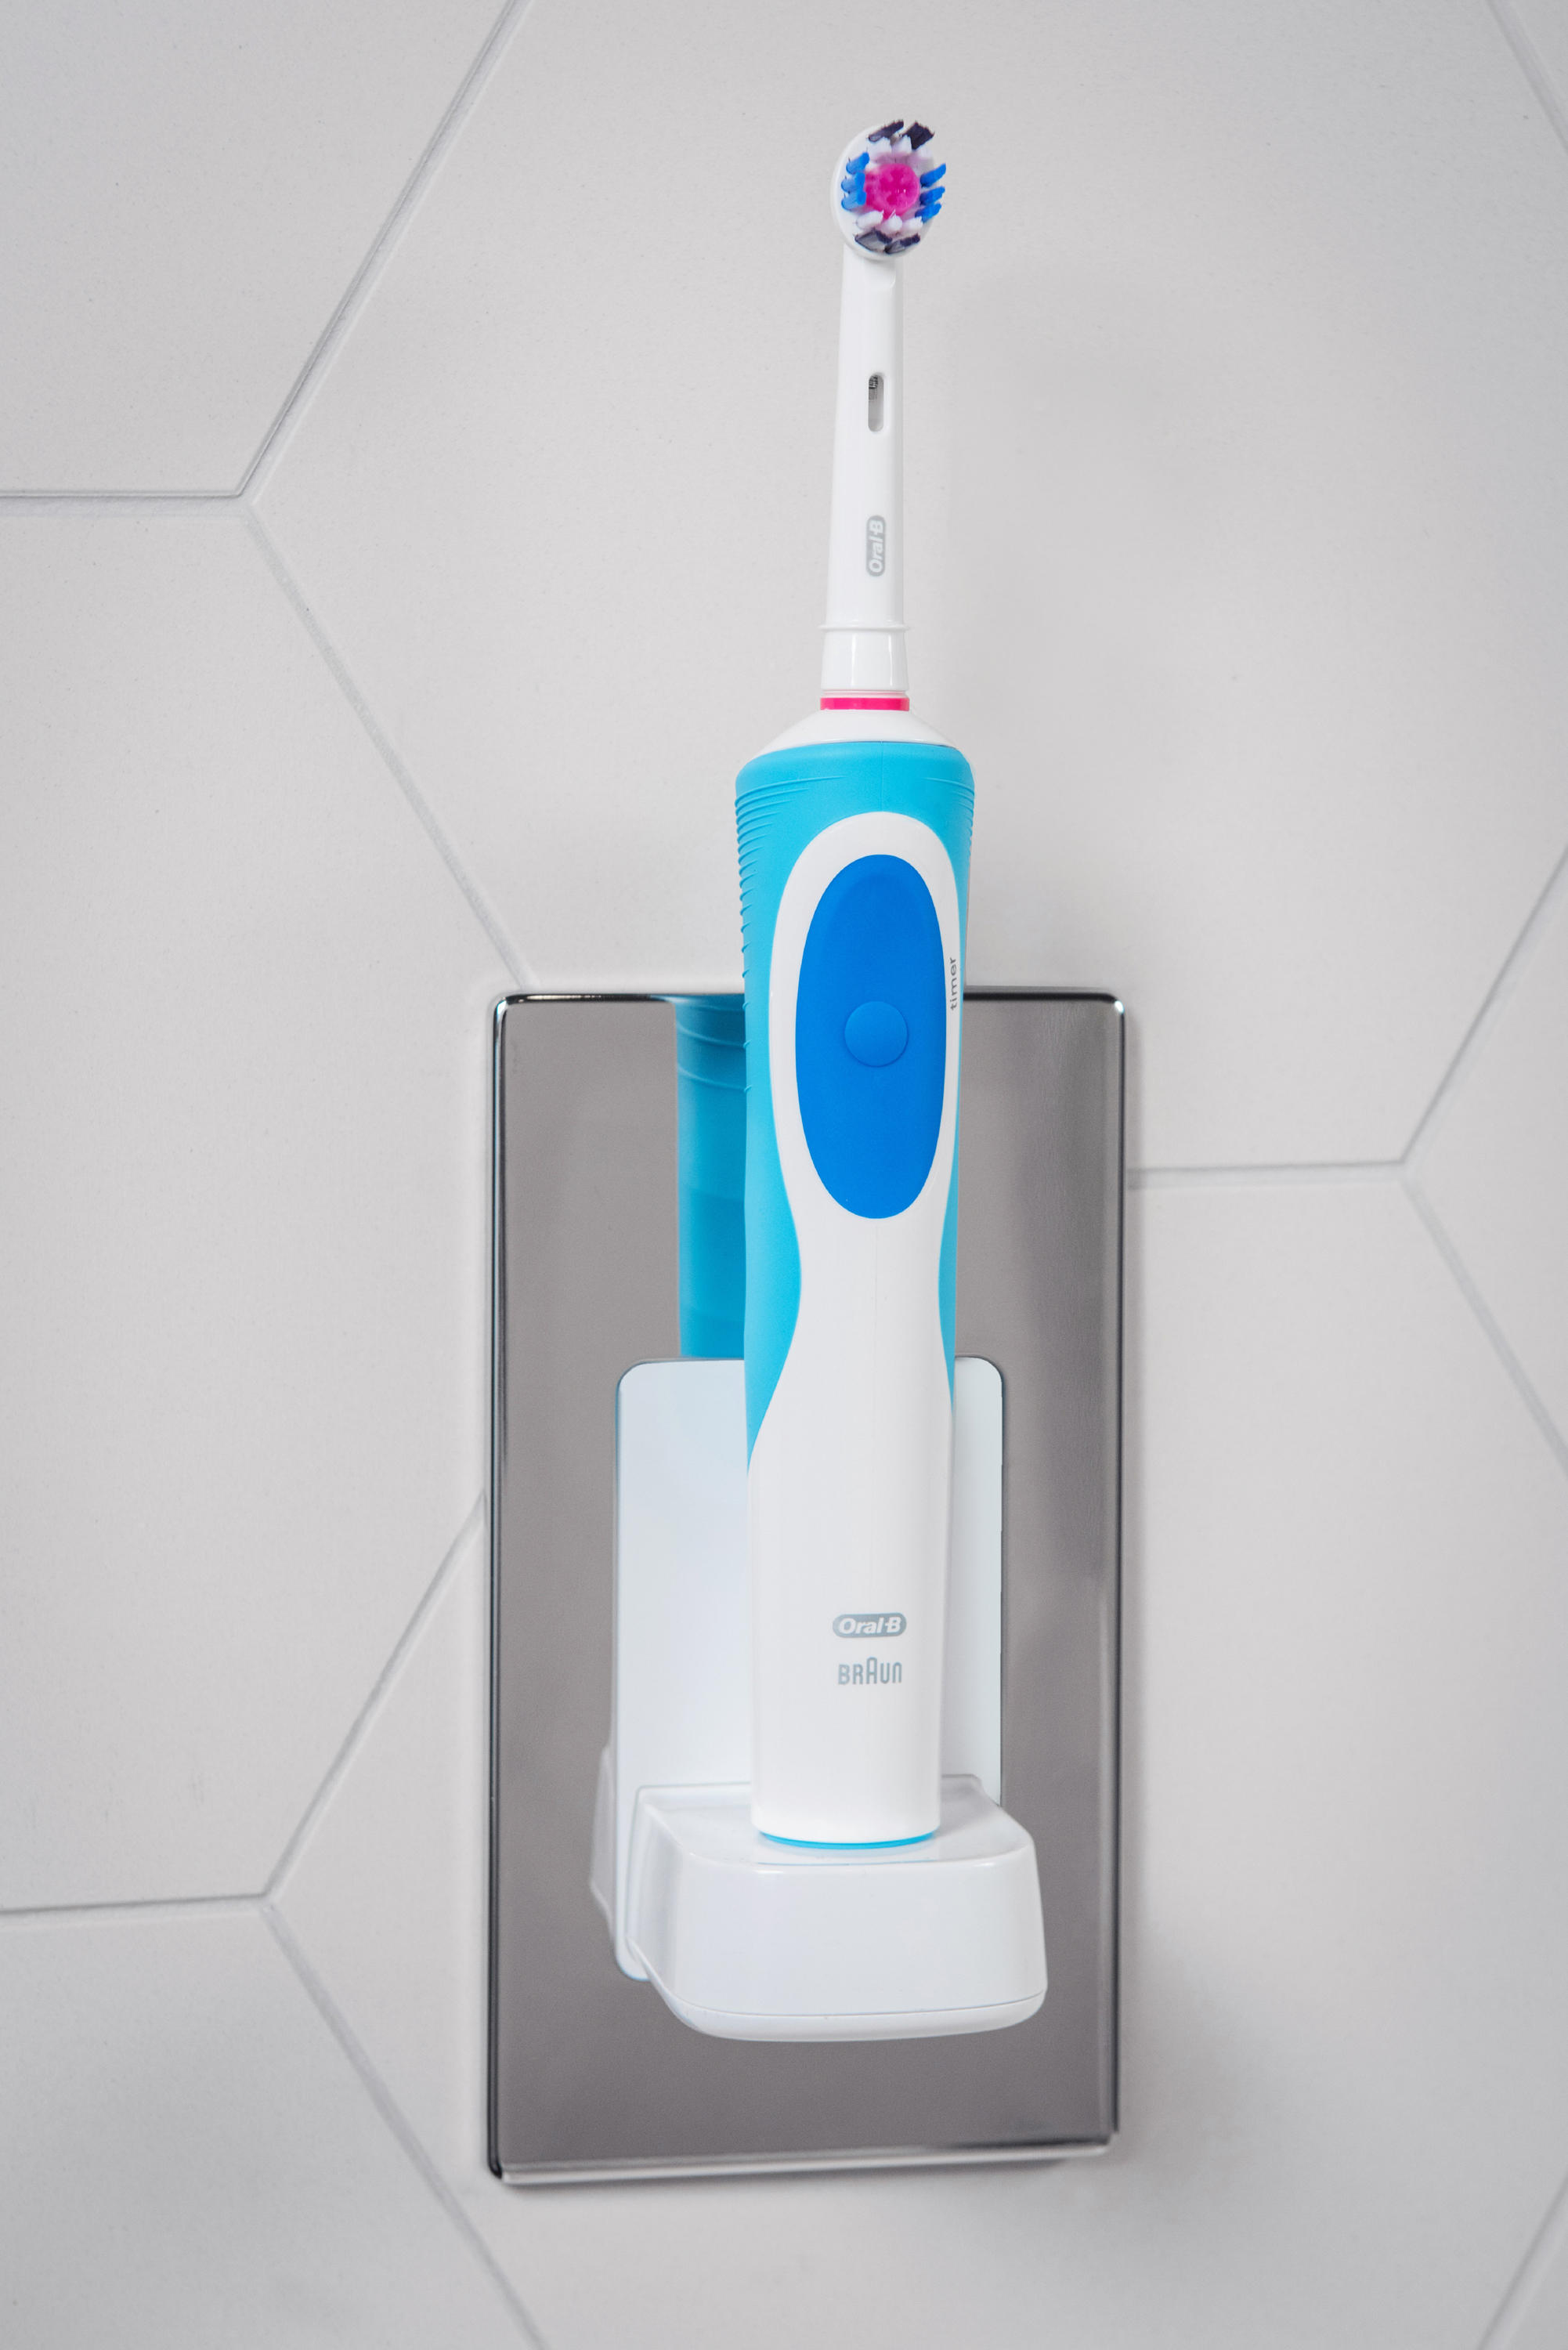 Introducir 77+ imagen braun toothbrush charger - Abzlocal.mx